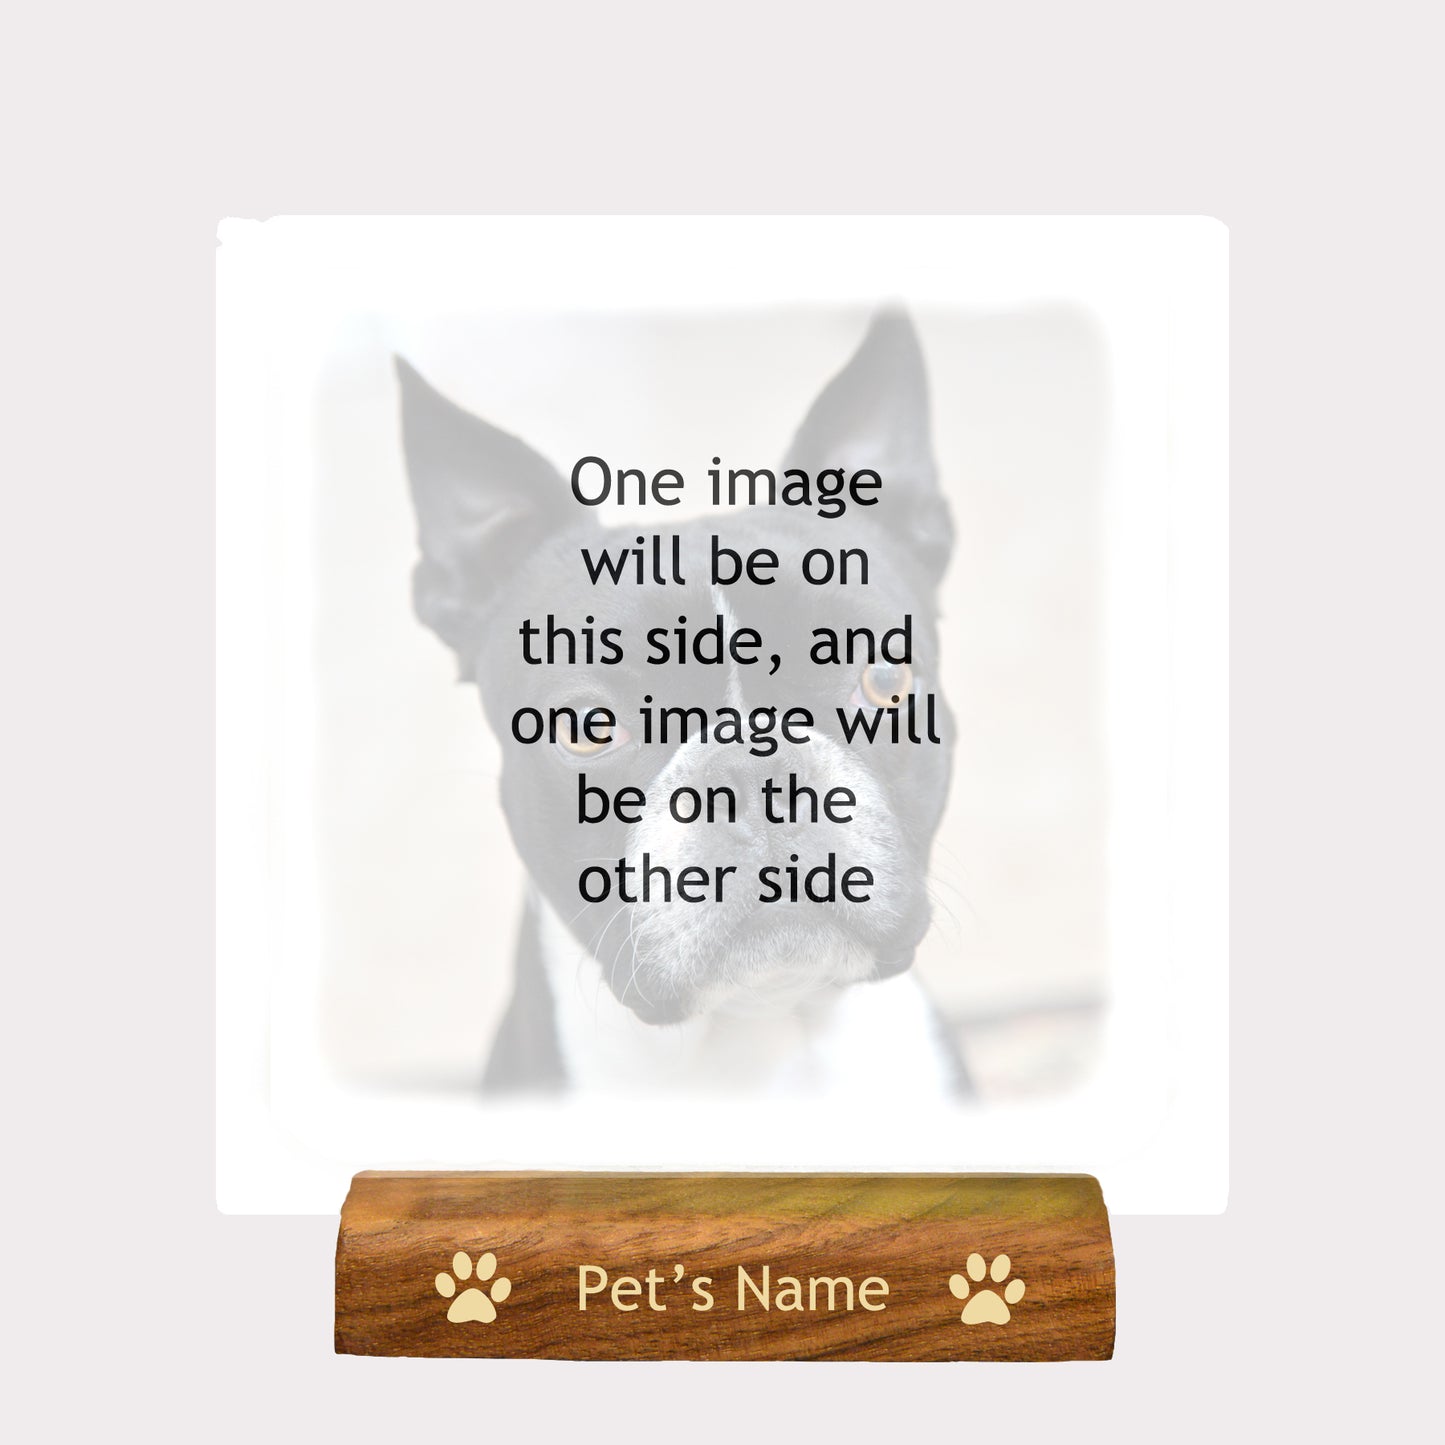 5" x 5" Custom Pet Photo on Wood with Display stand